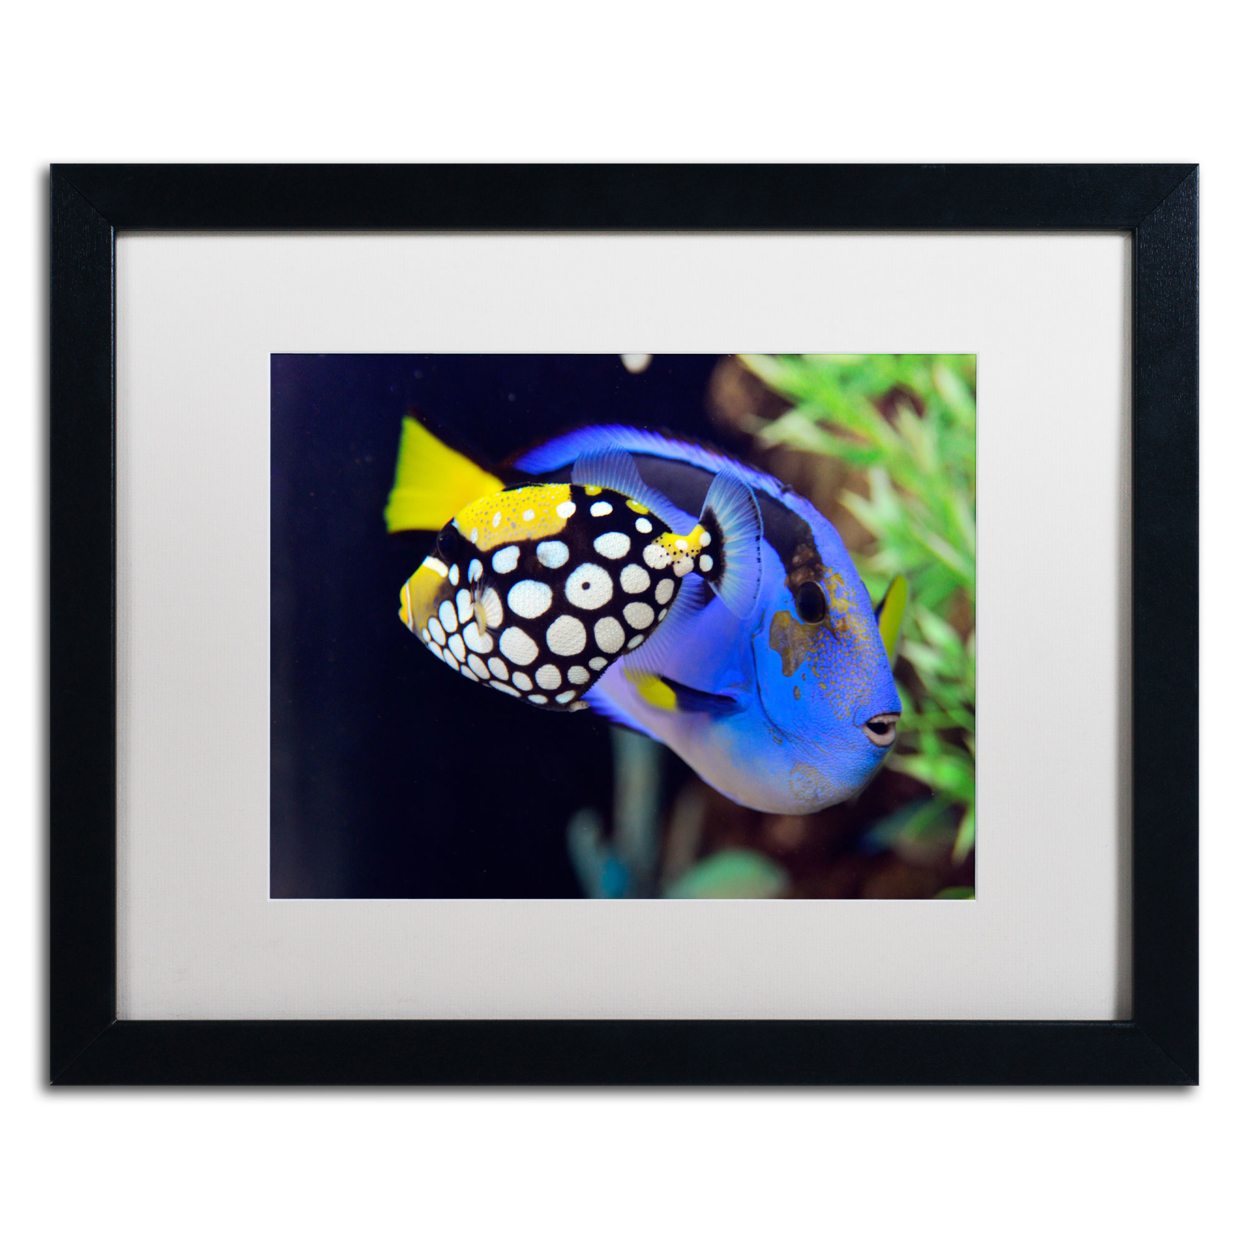 Kurt Shaffer 'Colorful Tropical Fish' Black Wooden Framed Art 18 X 22 Inches